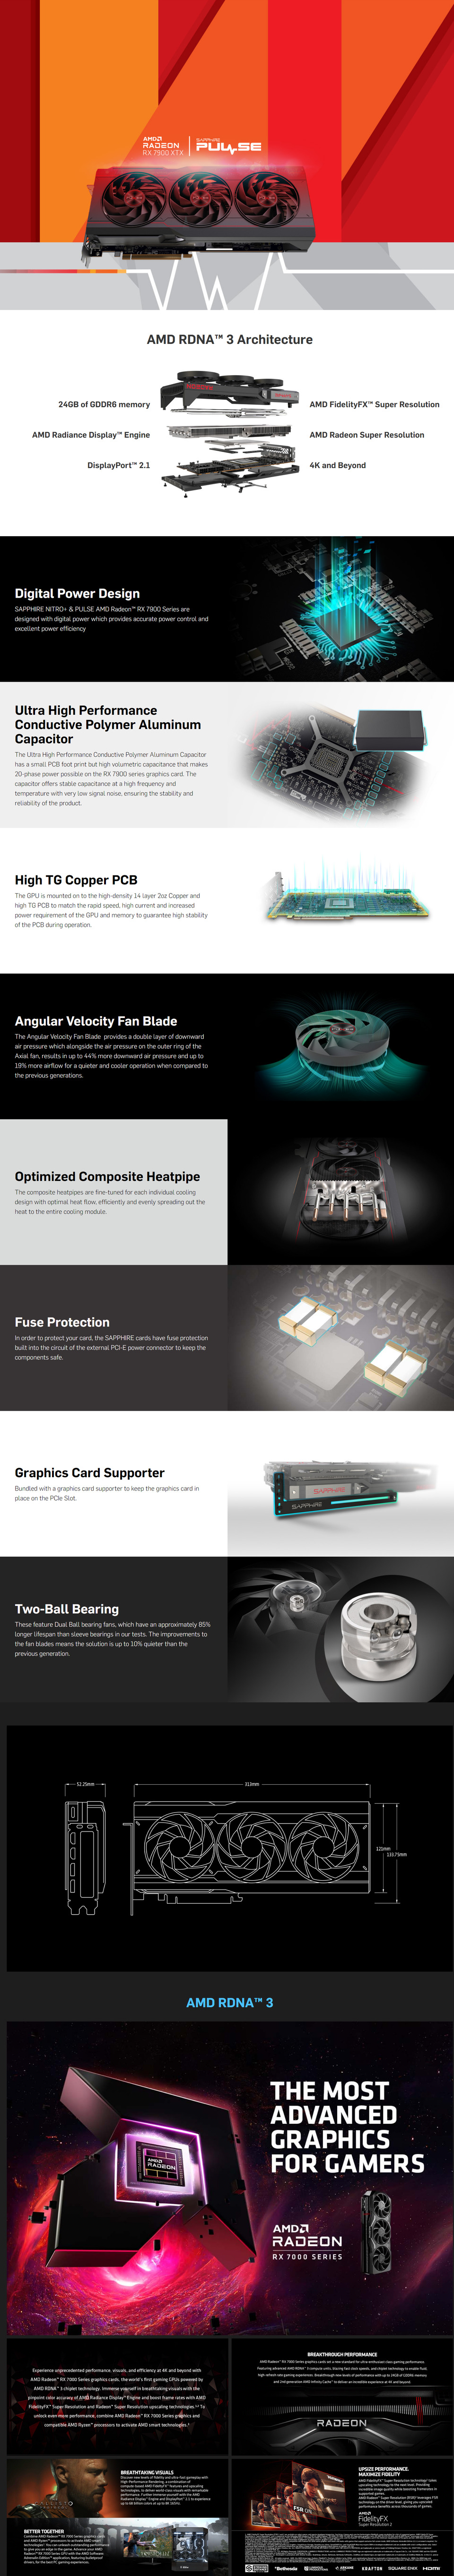 sapphire pulse rx 7900 xtx pcie graphics card